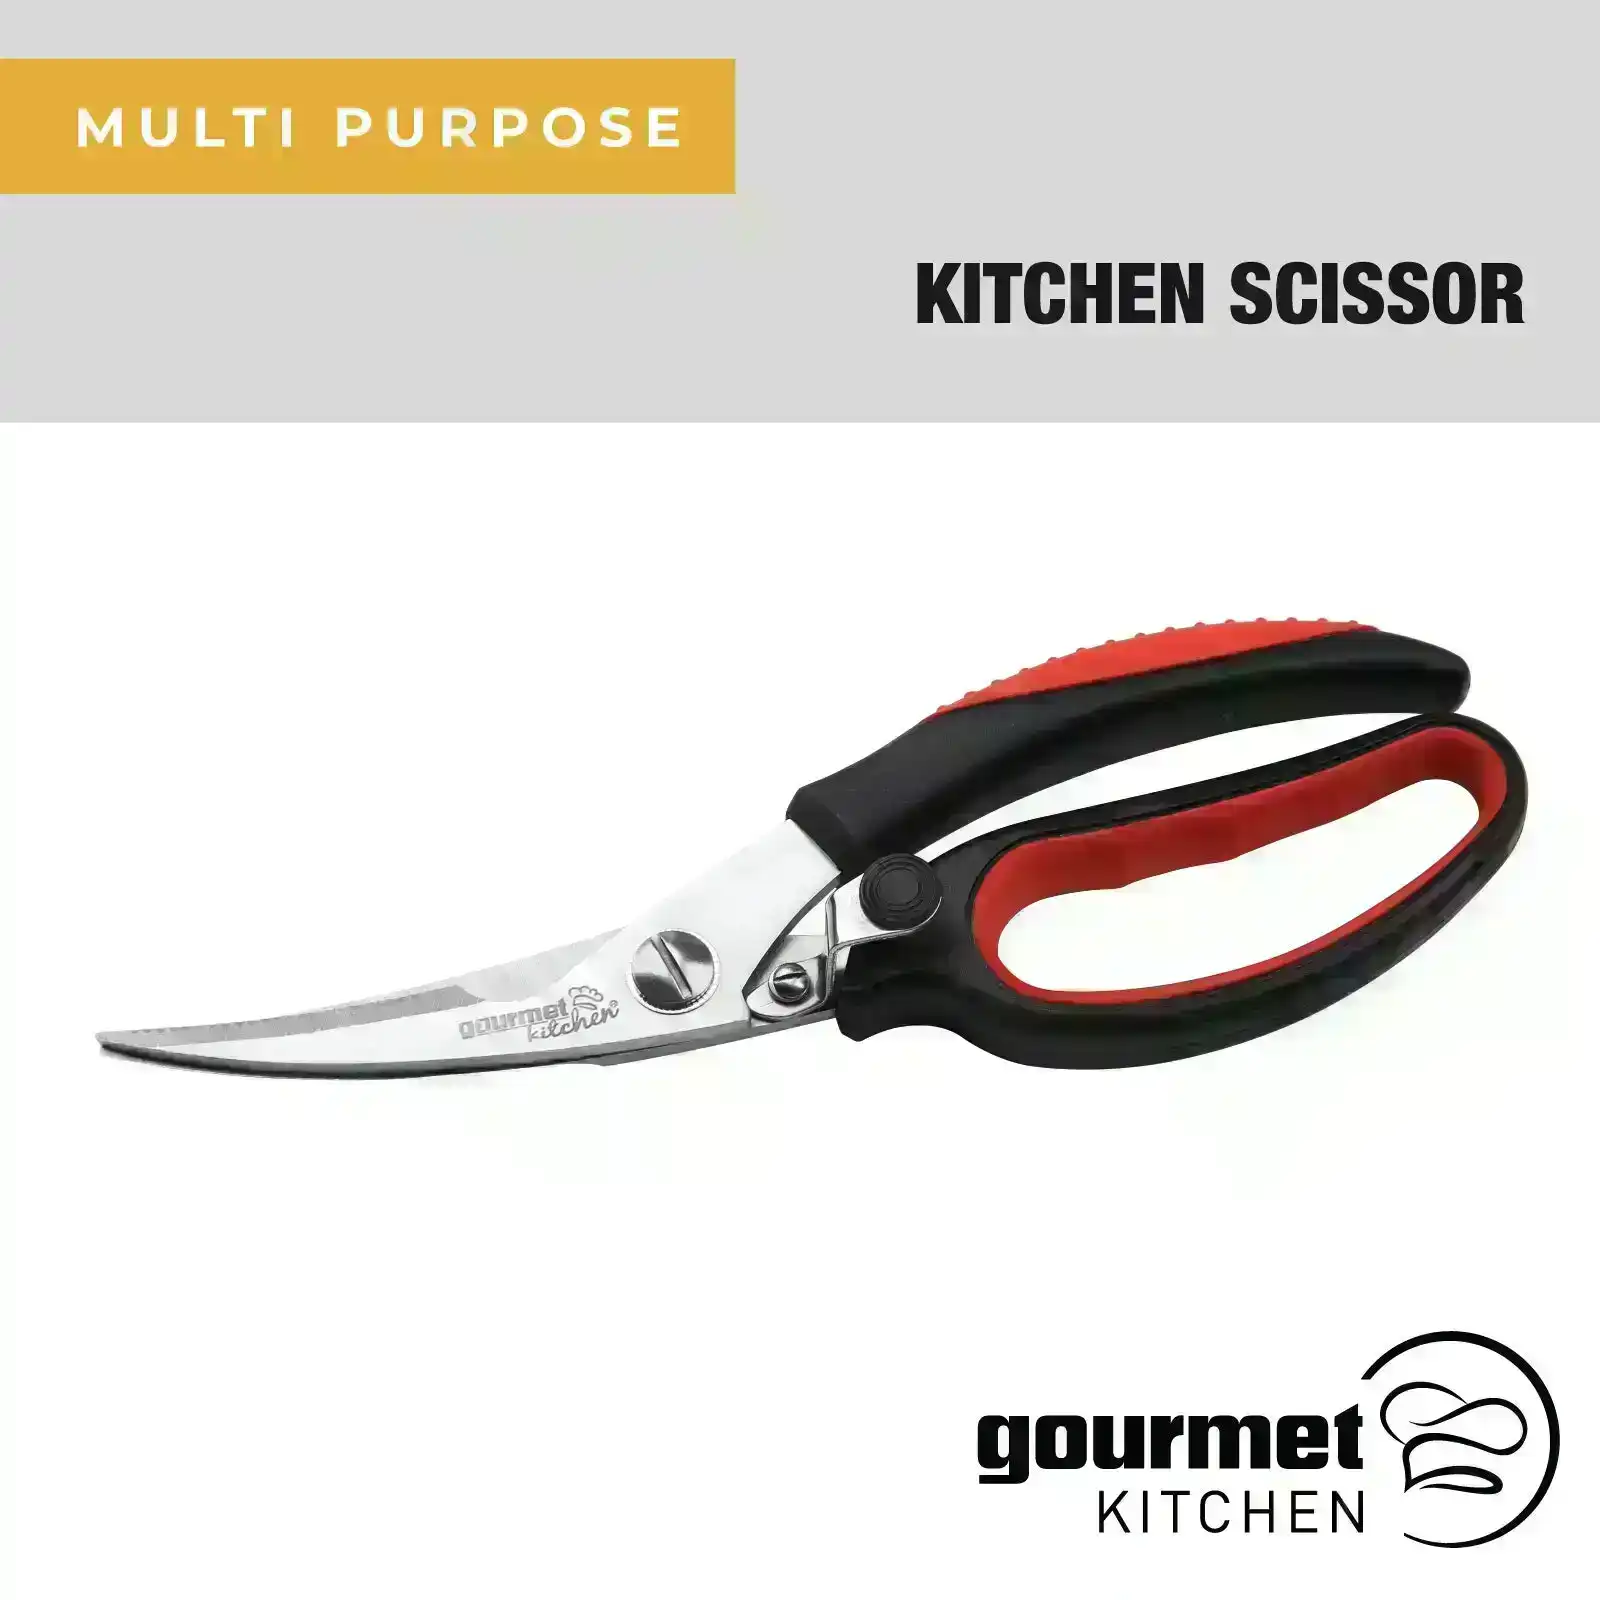 Gourmet Kitchen Multi Purpose Kitchen Scissors - Silver